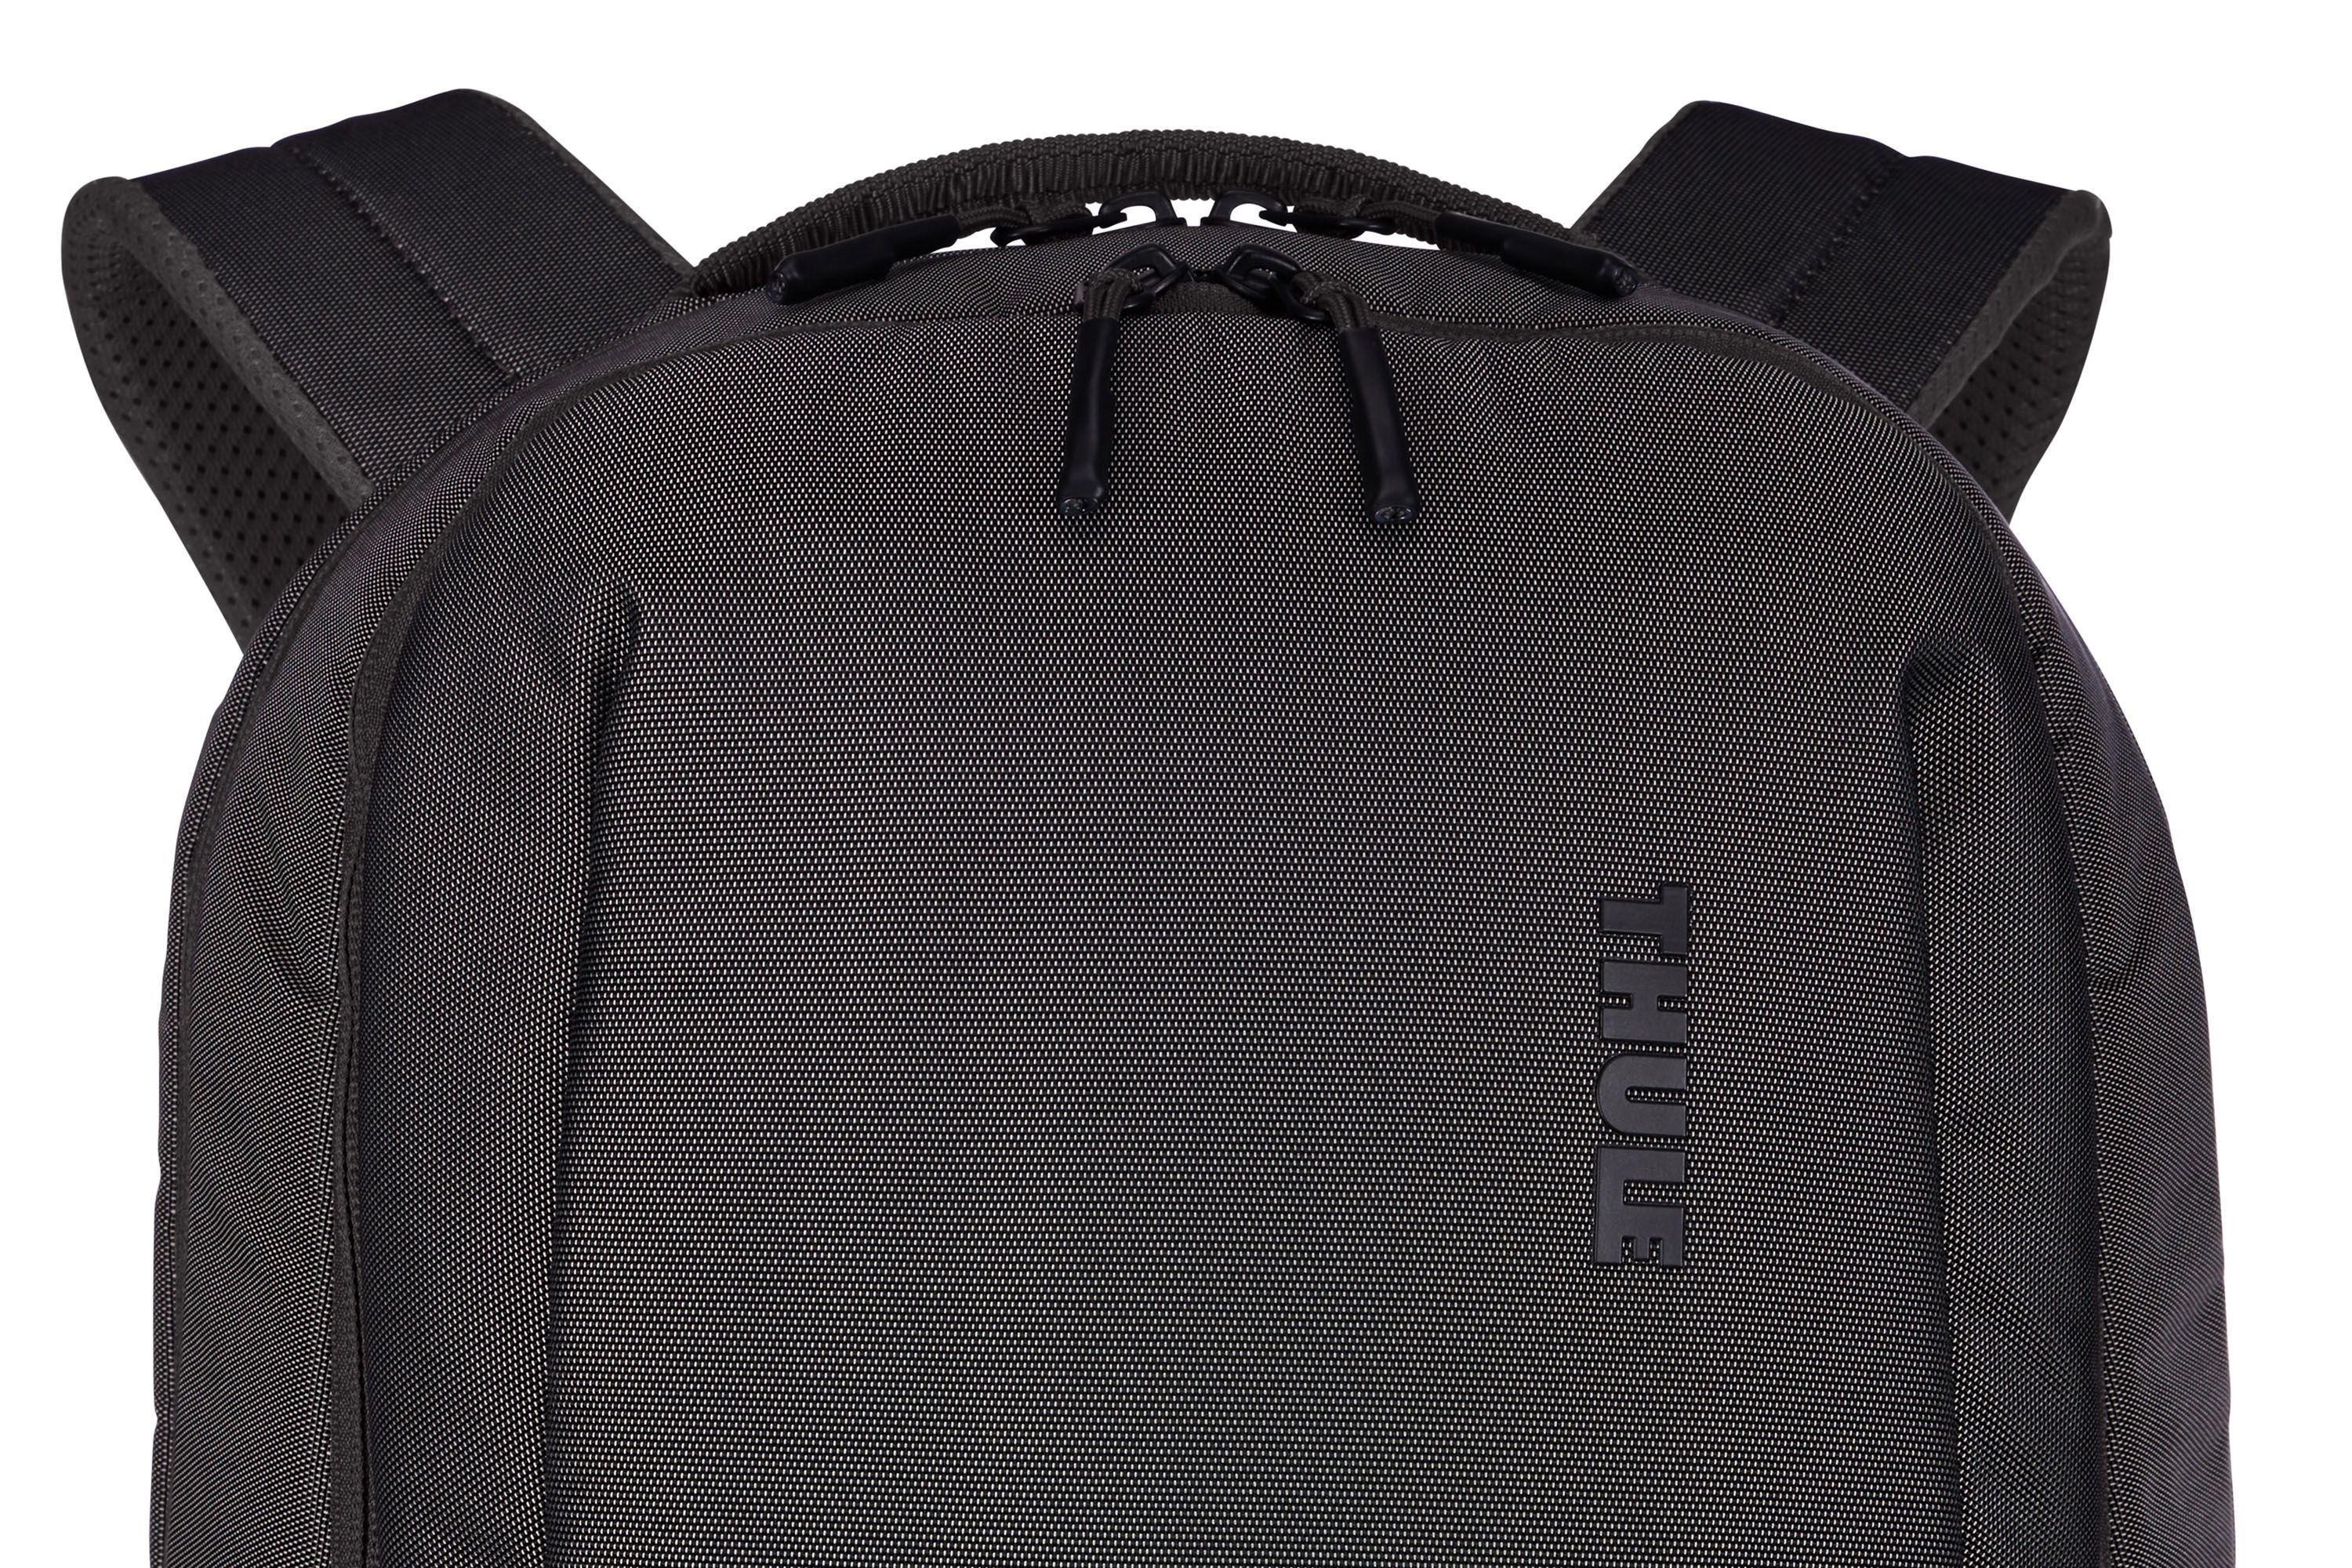 Thule Subterra backpack 21L Vetiver Gray